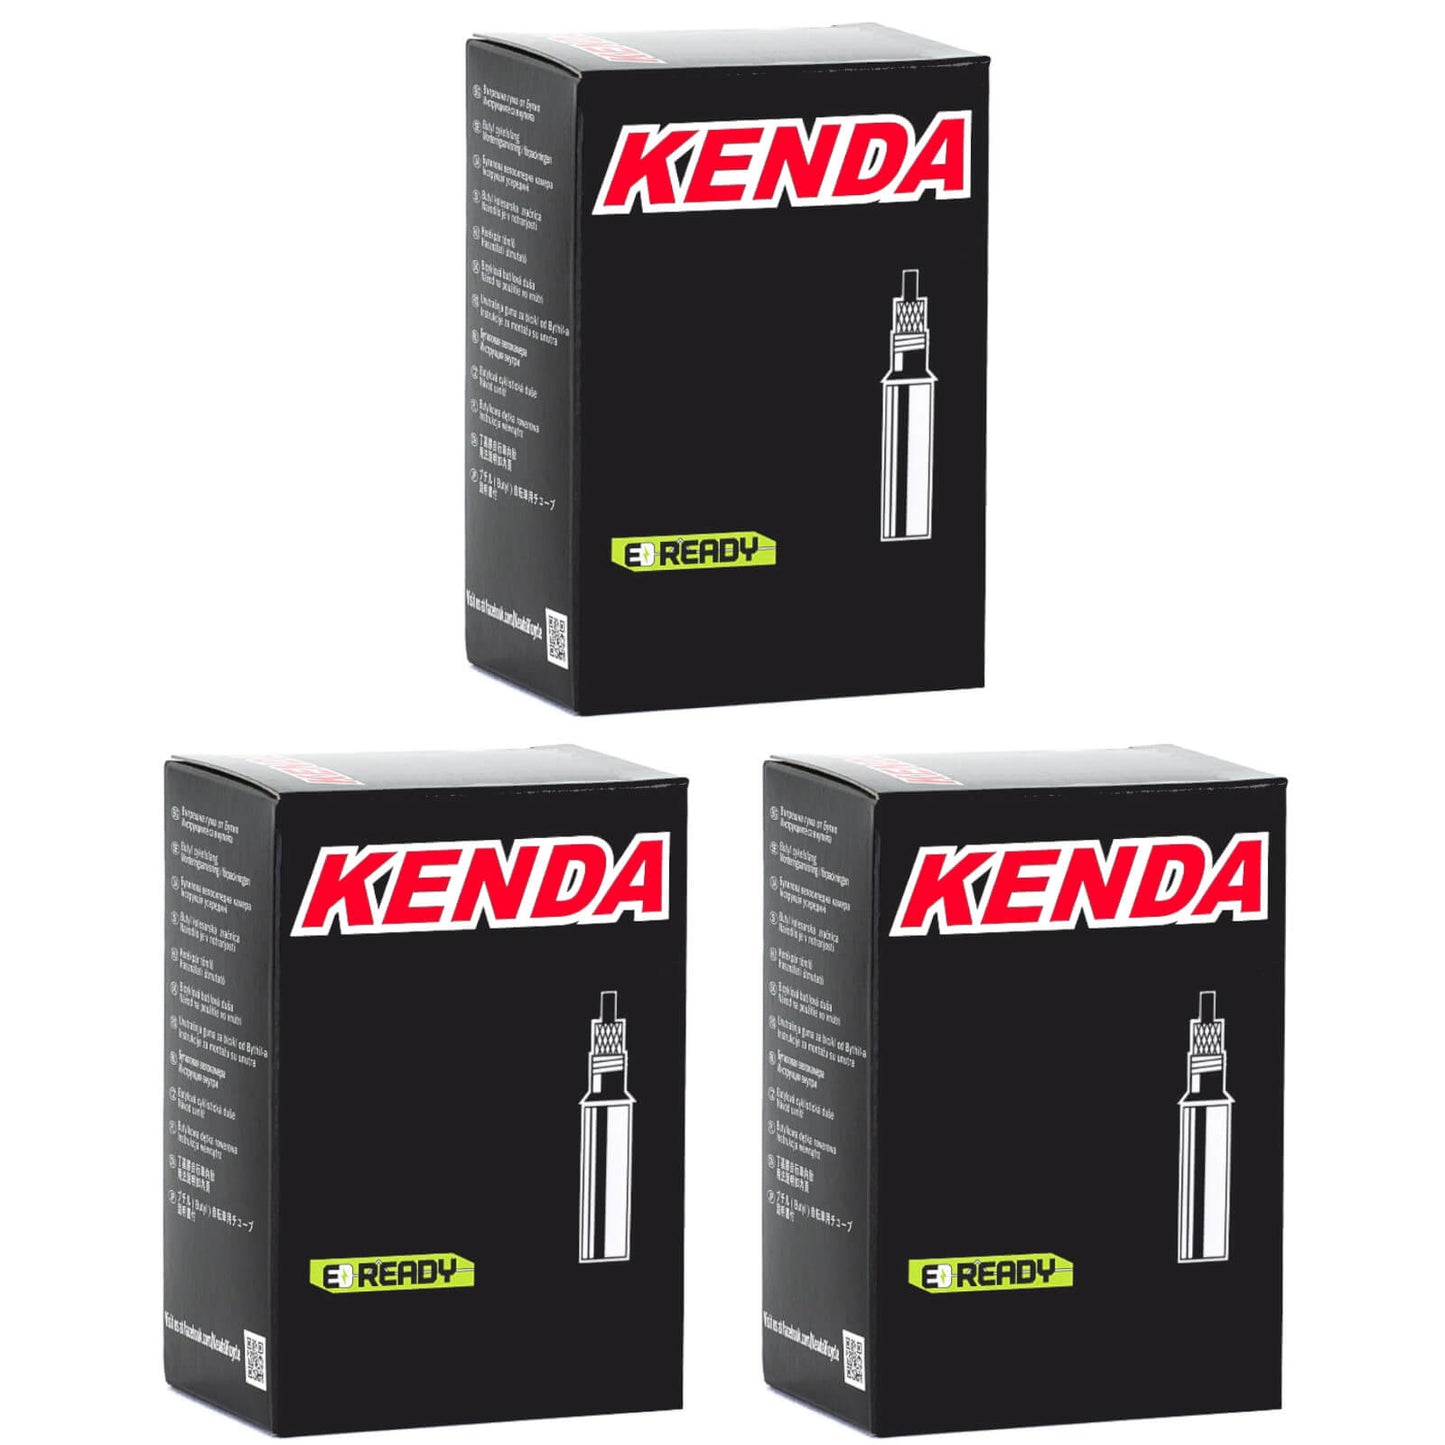 Kenda 26x1.5-1.75" 26 Inch Presta Valve Bike Inner Tube Pack of 3